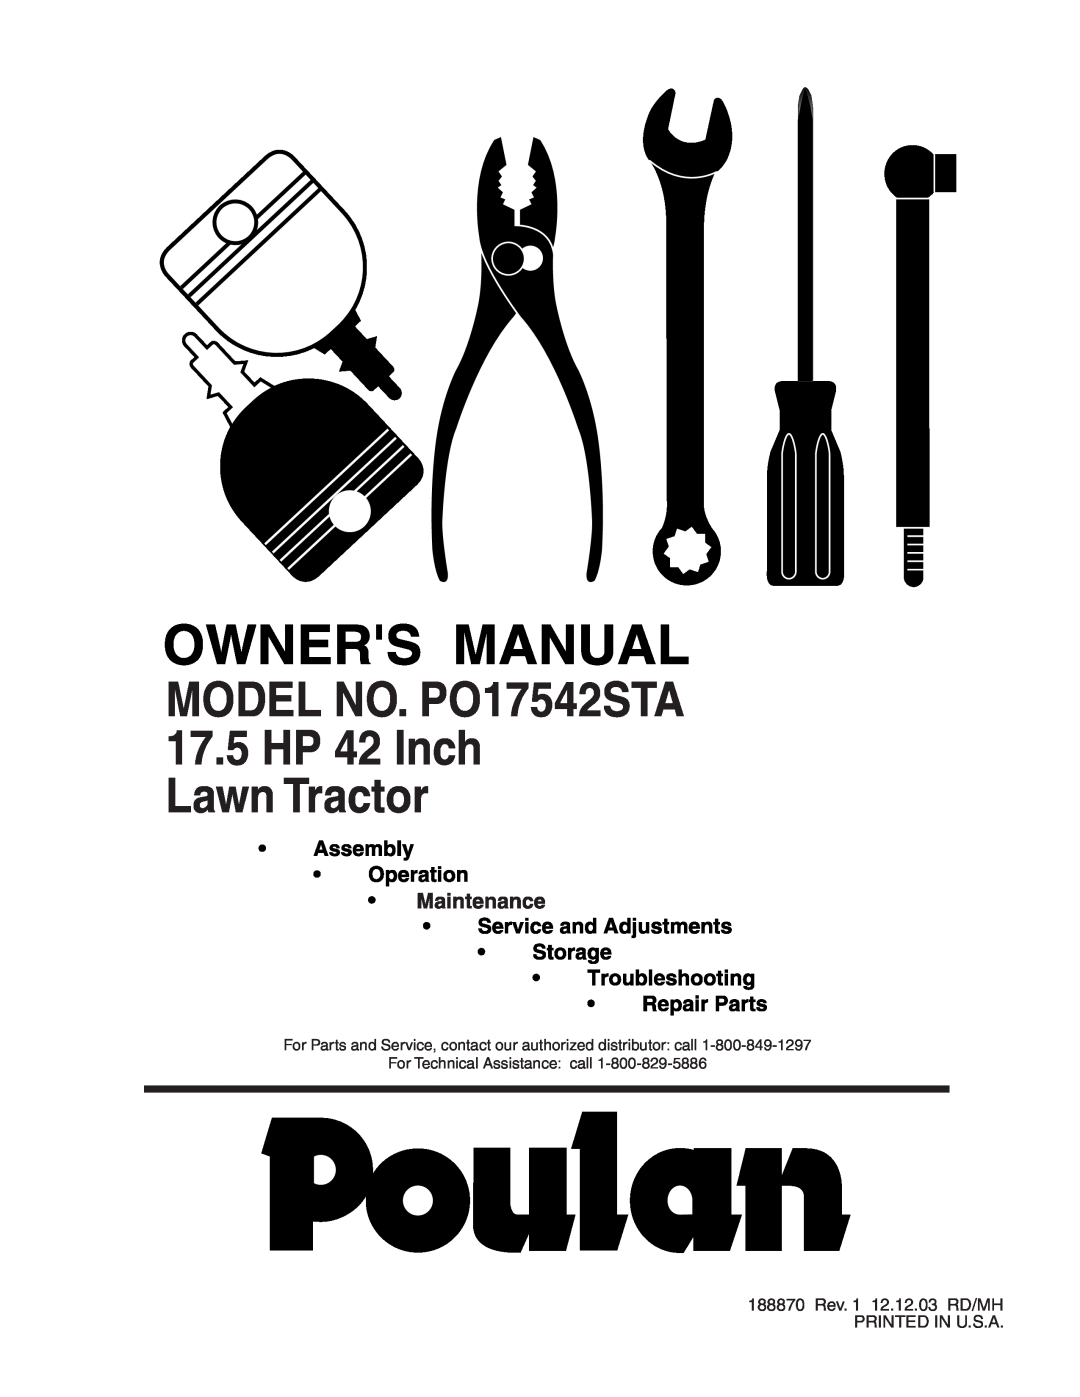 Poulan manual MODEL NO. PO17542STA 17.5 HP 42 Inch Lawn Tractor 